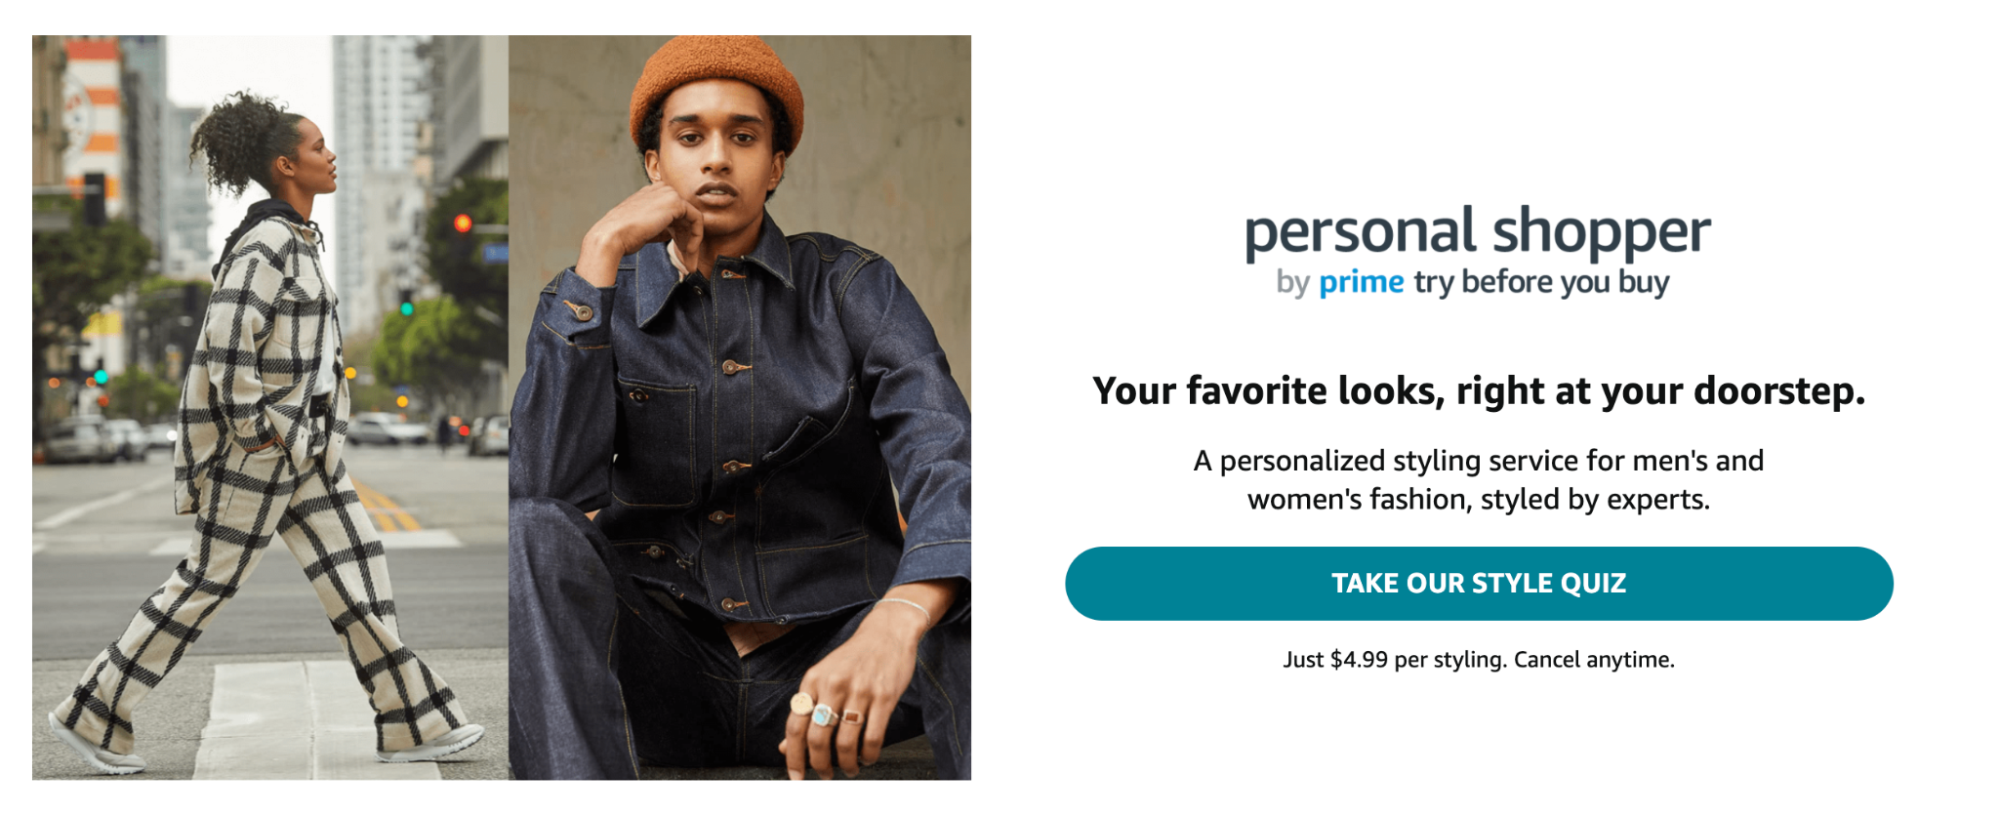 Amazon personal shopper